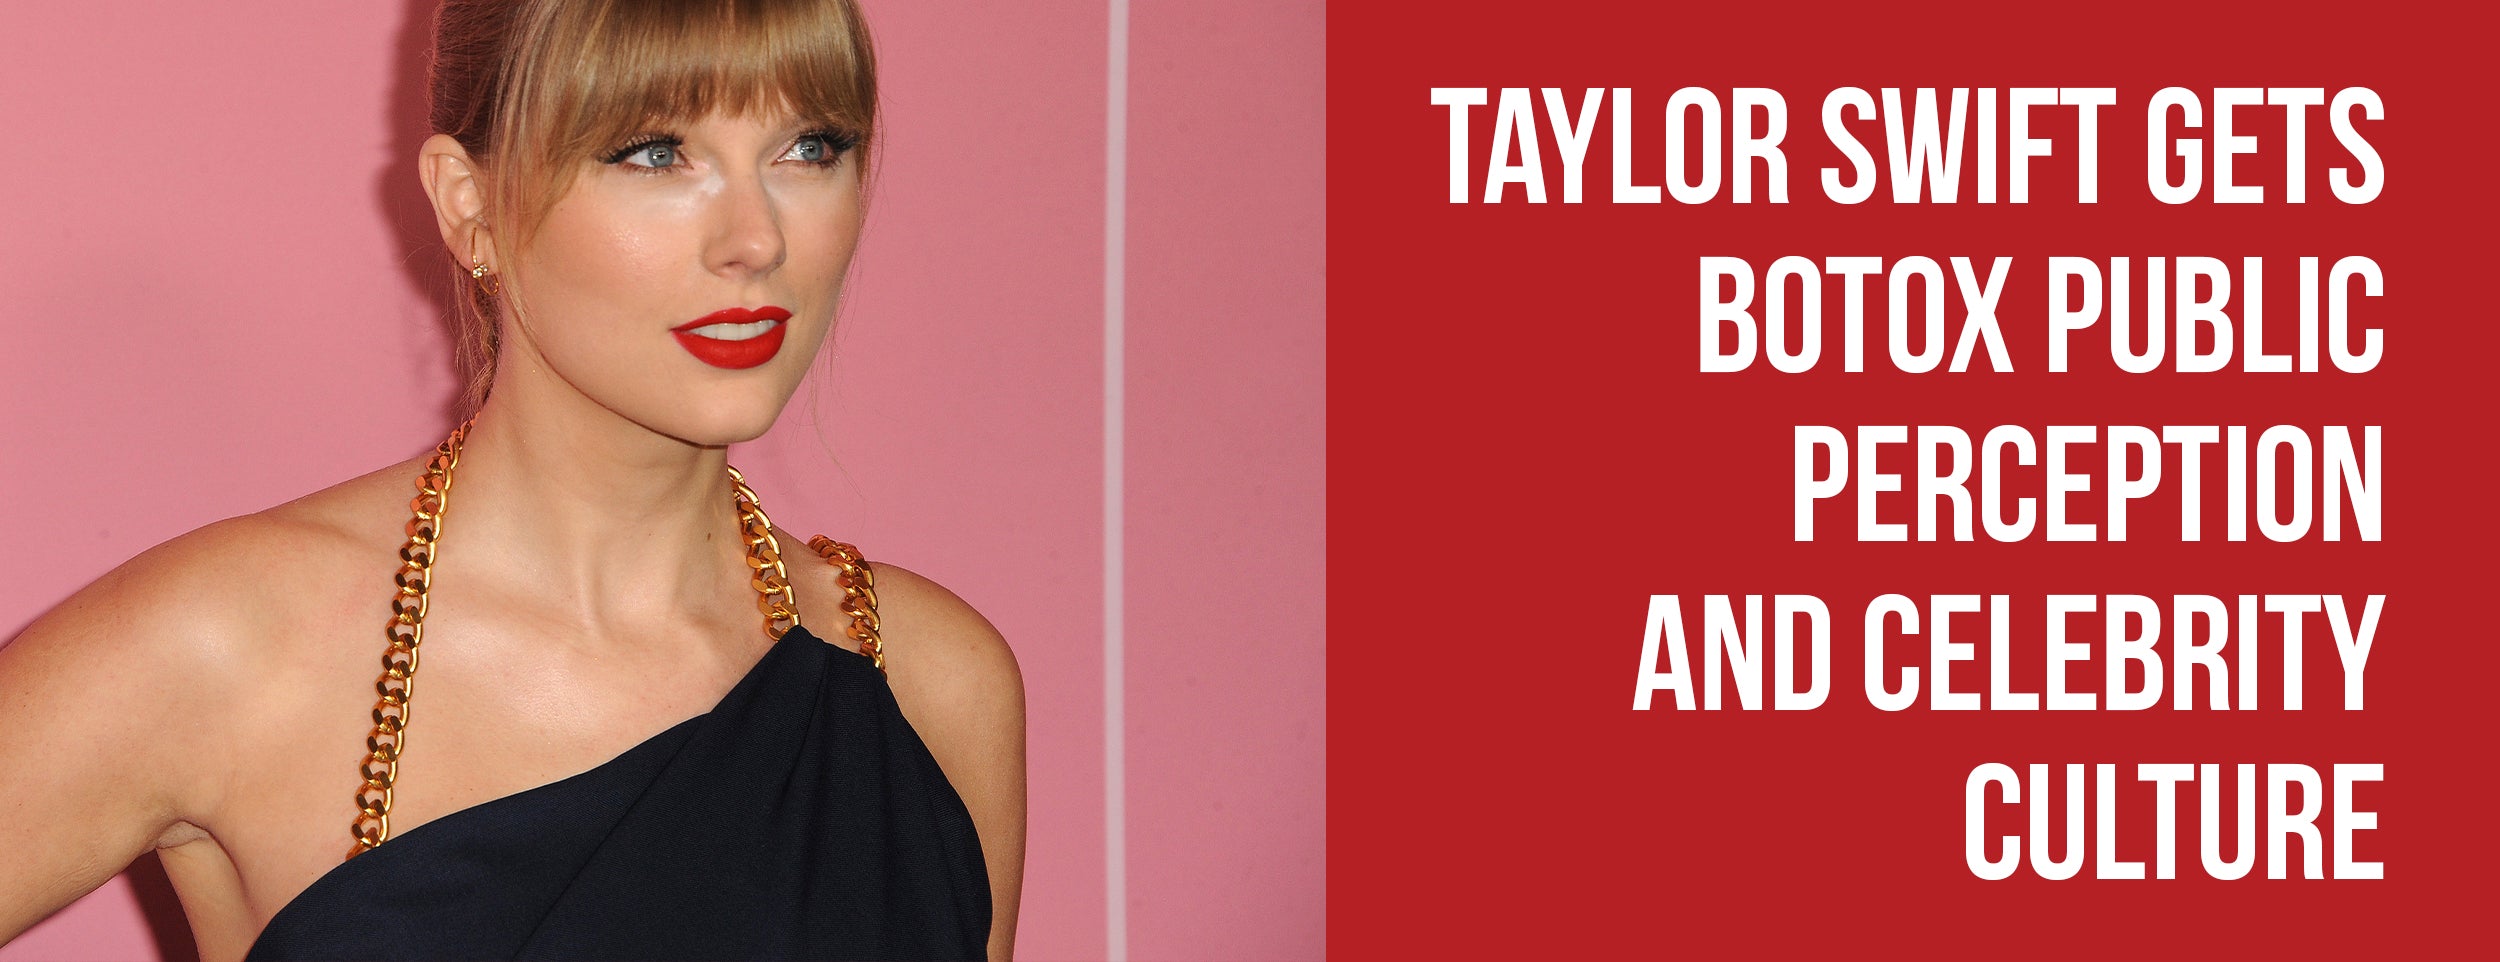 The public perception of Taylor Swift's Botox procedure